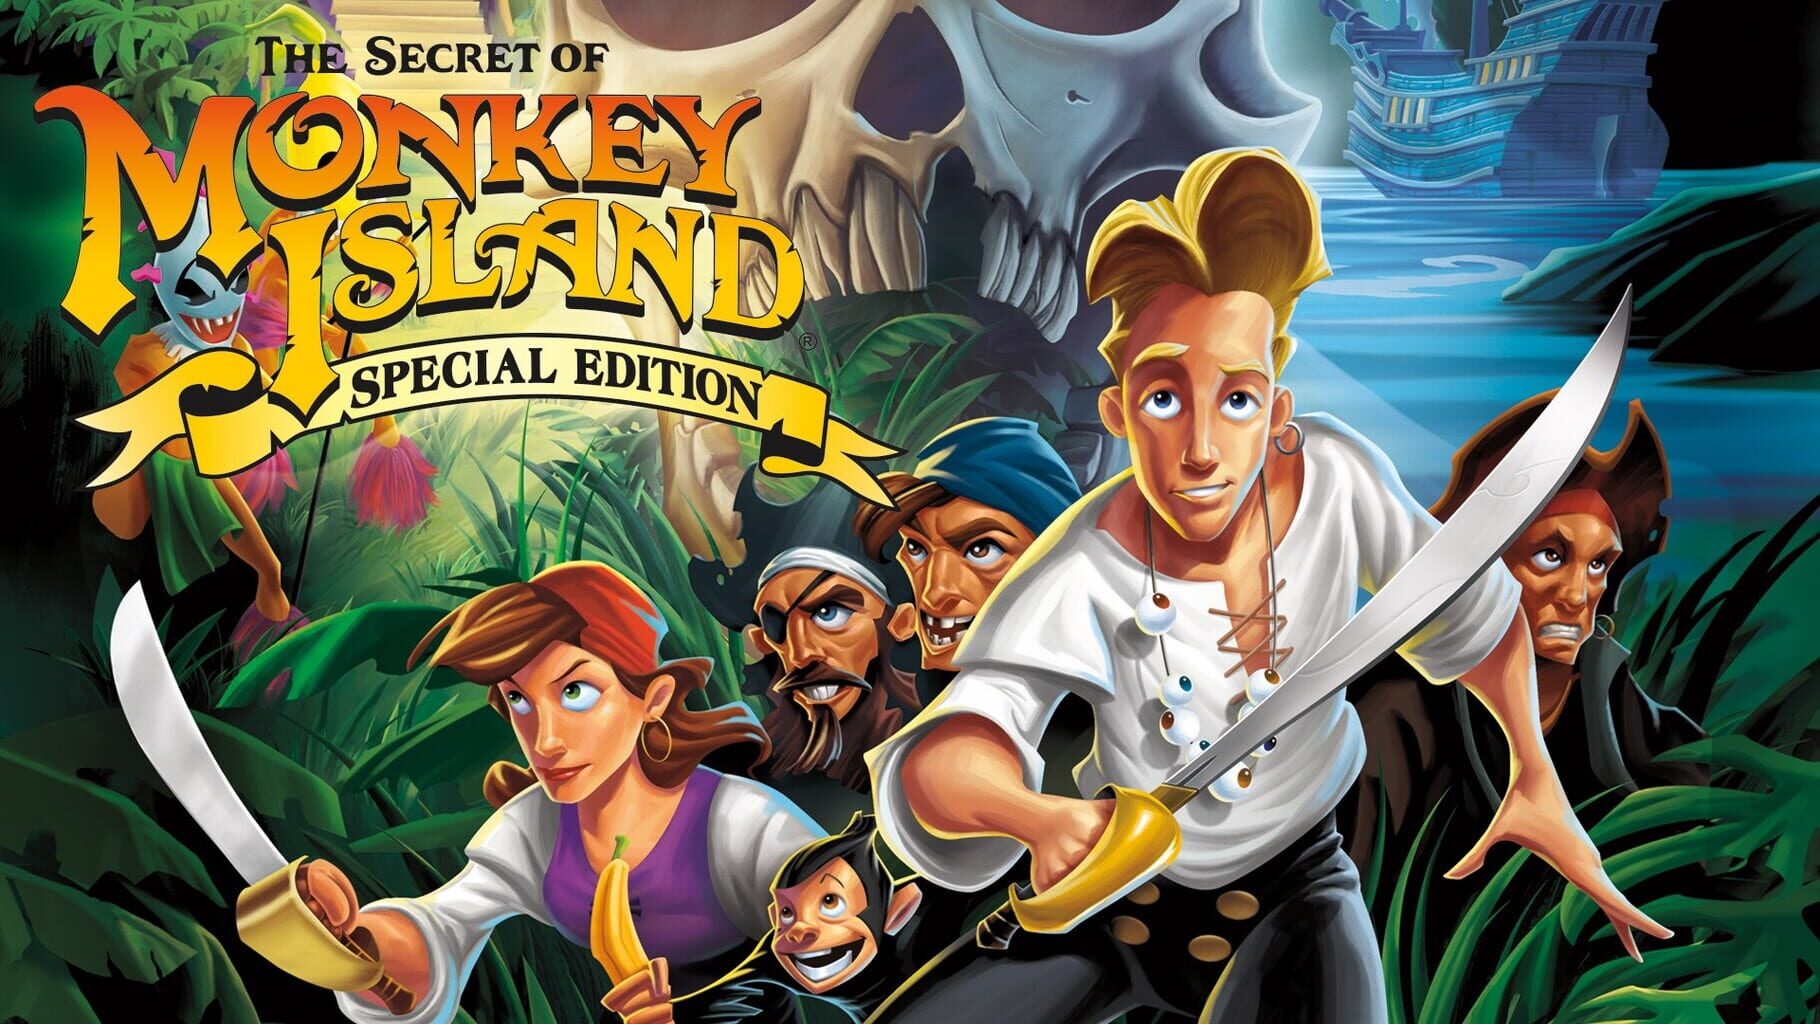 Arte - The Secret of Monkey Island: Special Edition